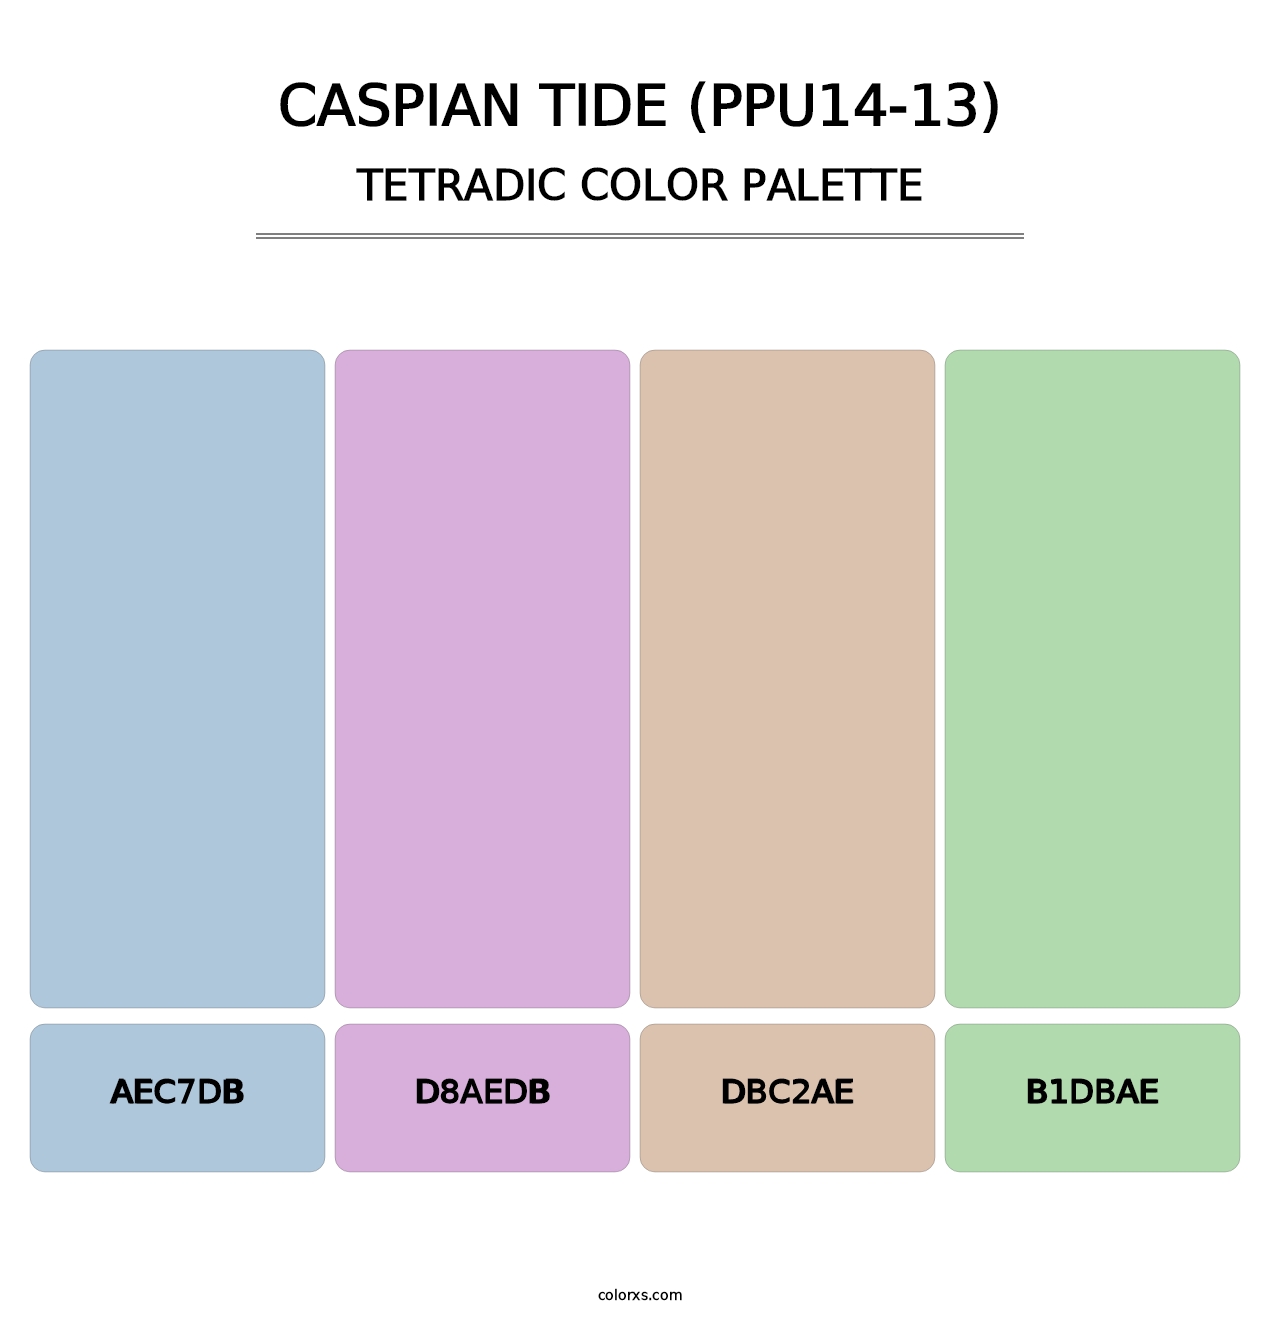 Caspian Tide (PPU14-13) - Tetradic Color Palette